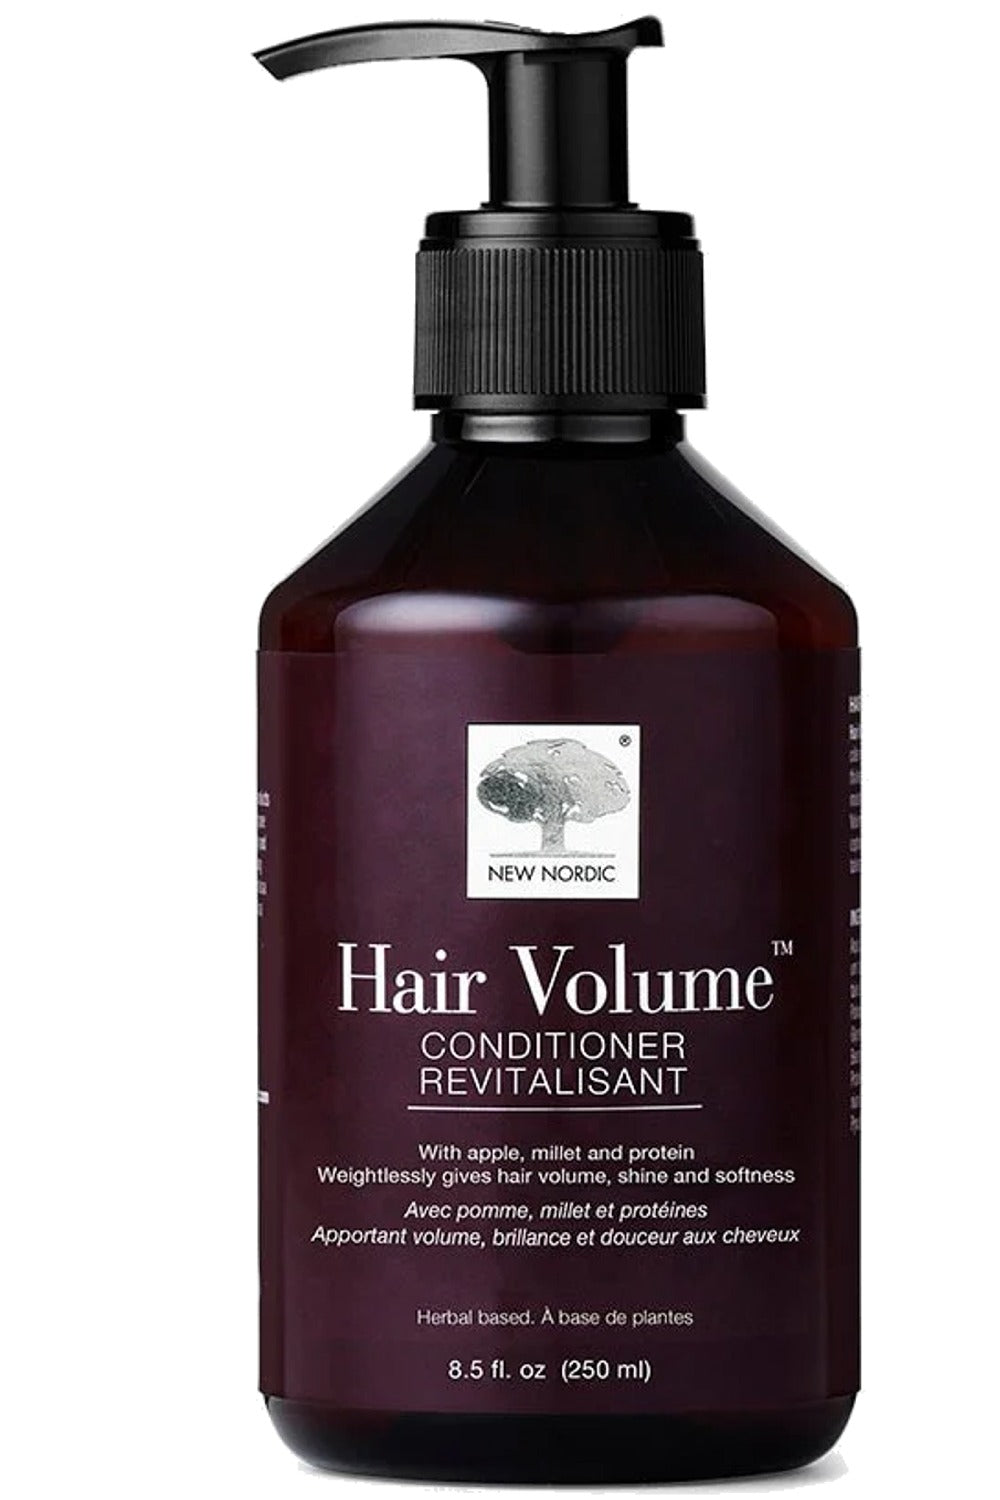 NEW NORDIC Hair Volume Conditioner (250 ml)